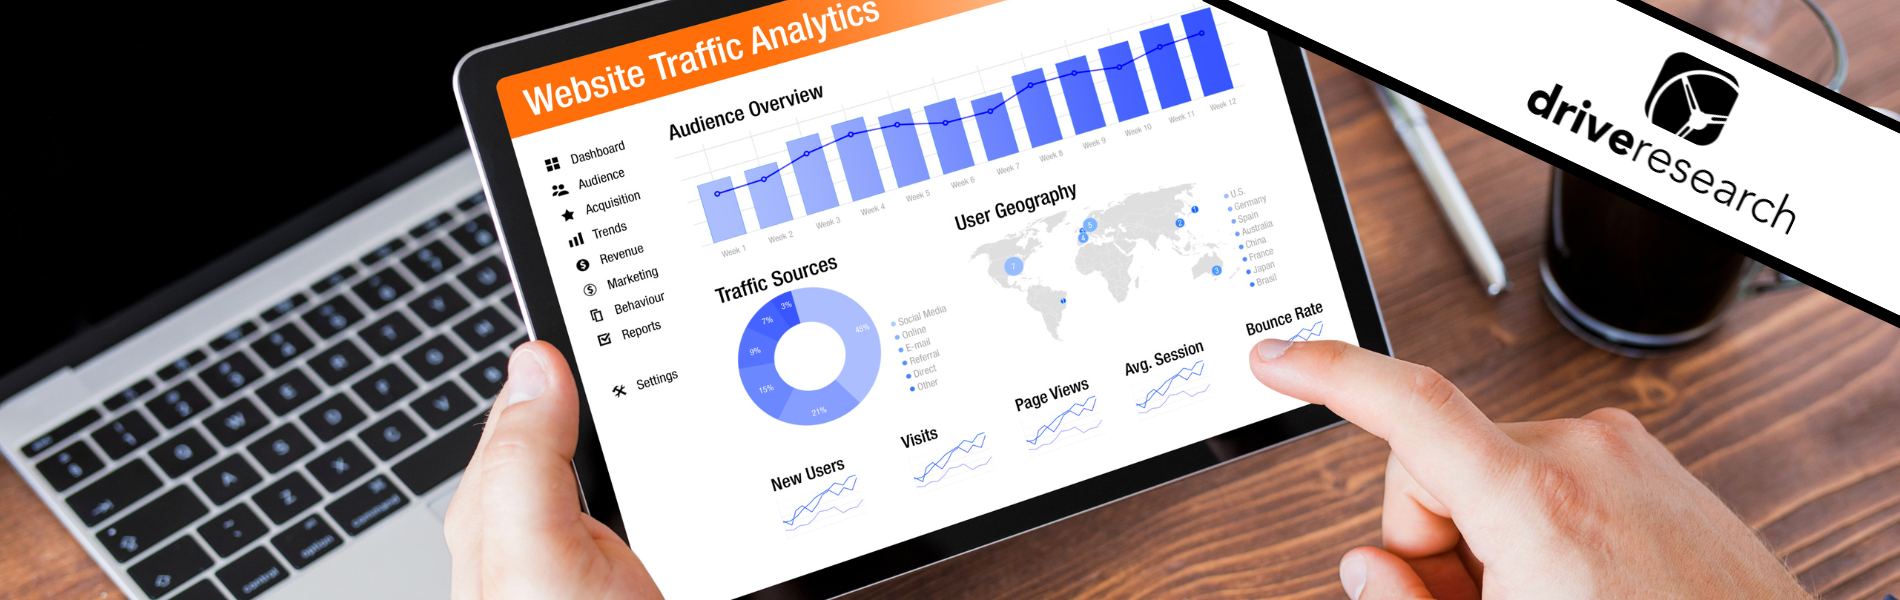 Man Viewing Website Traffic Analytics Data on Tablet Computer